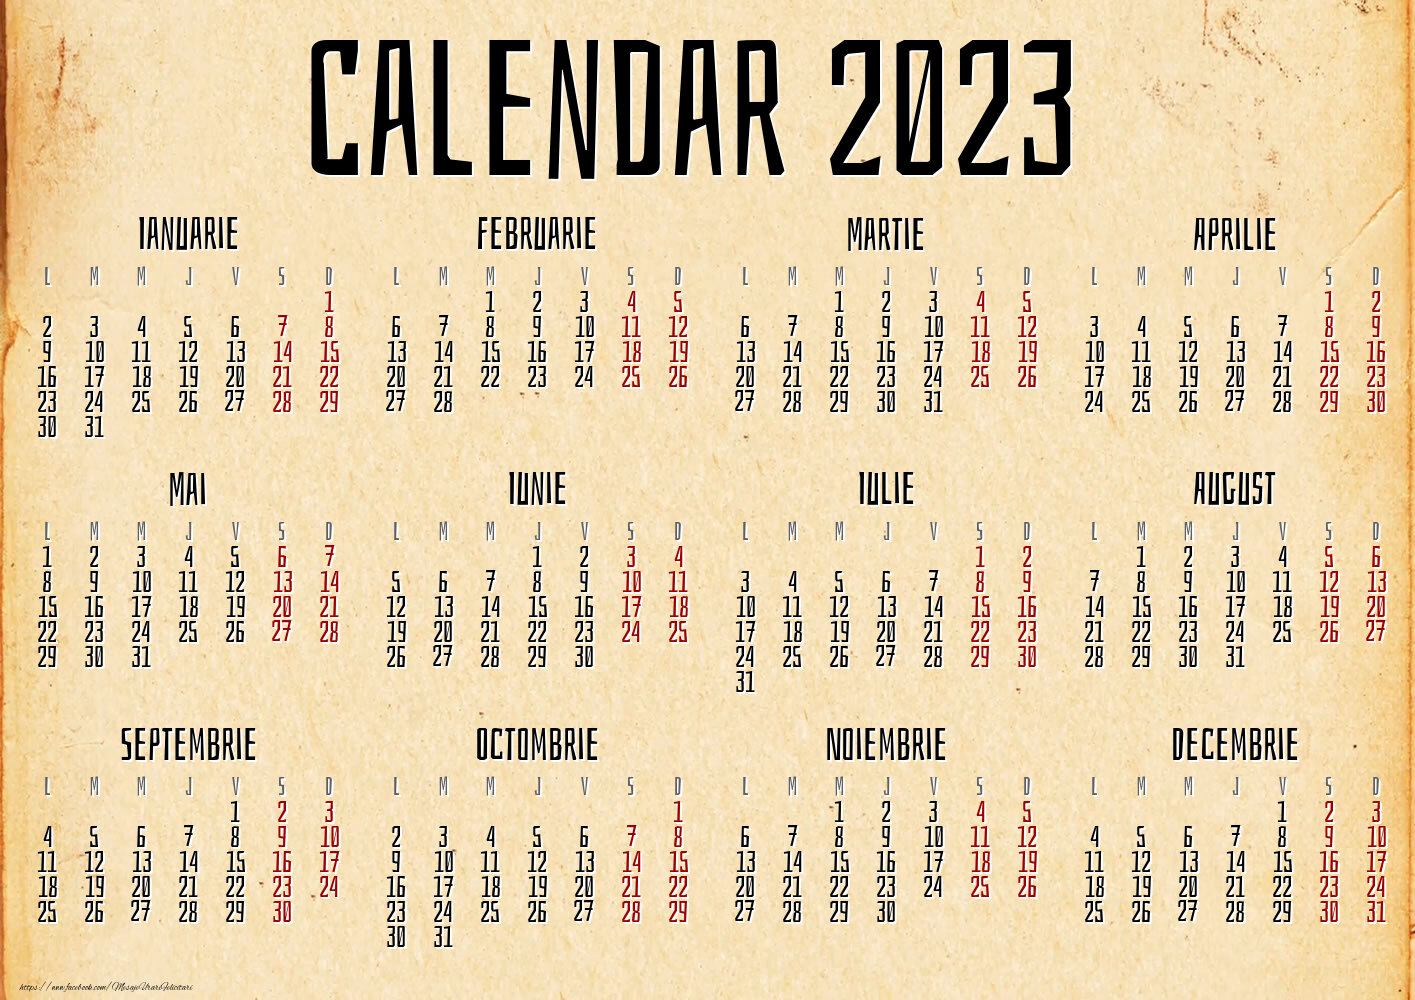 Imagini cu calendare - Calendar 2023 - Vintage Paper - Model 0048 - mesajeurarifelicitari.com